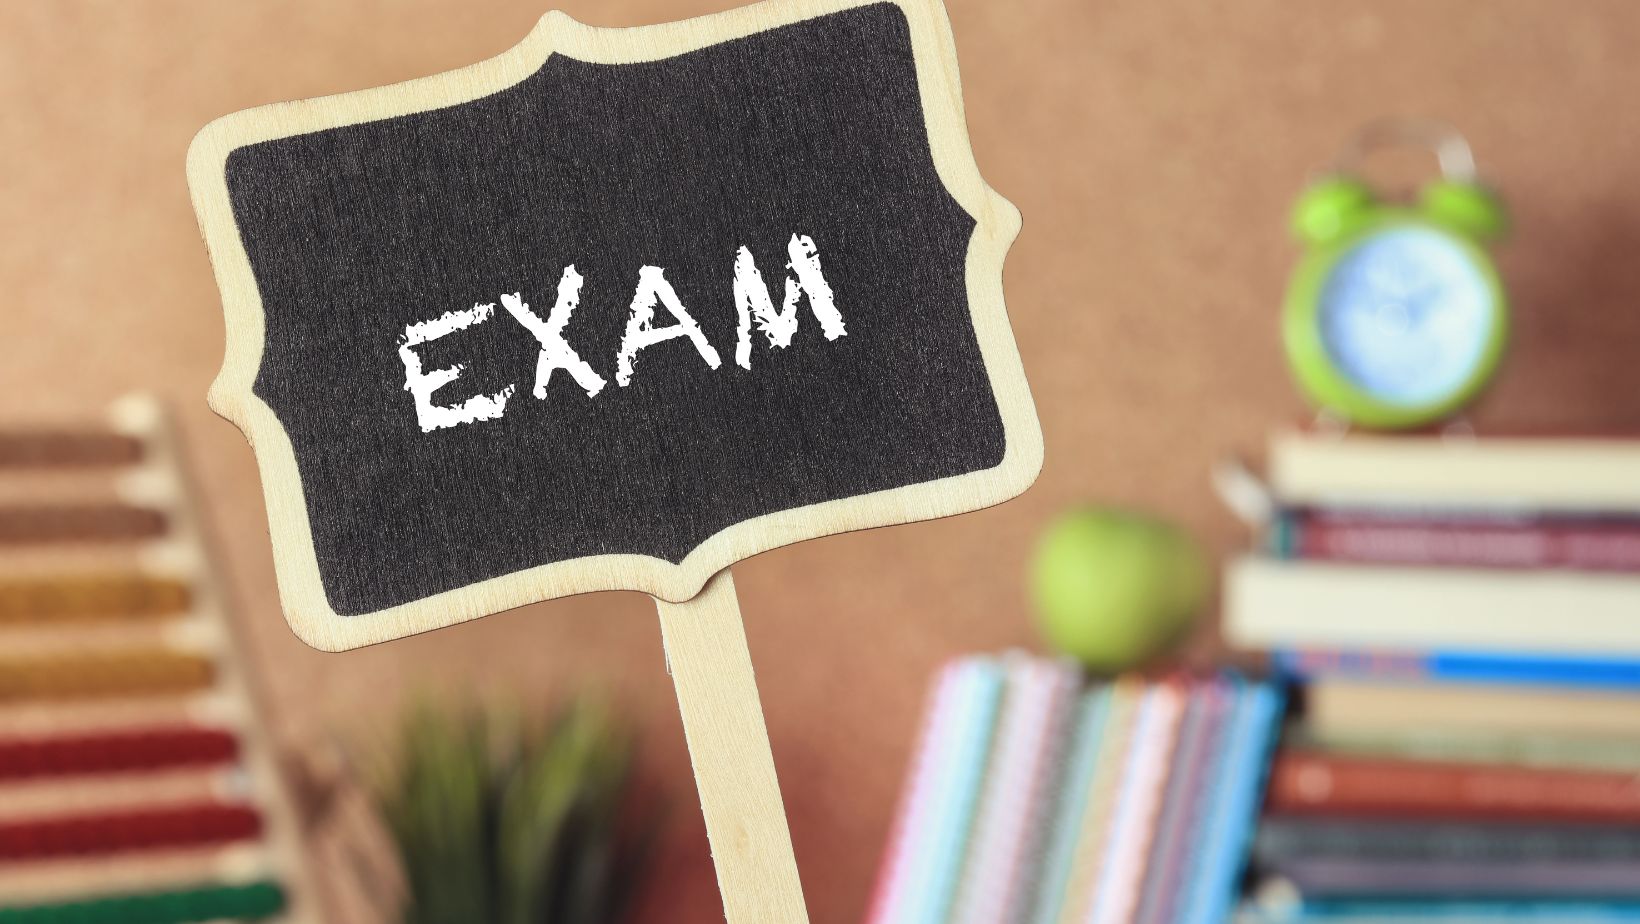 en itn skills assessment - student training exam answers